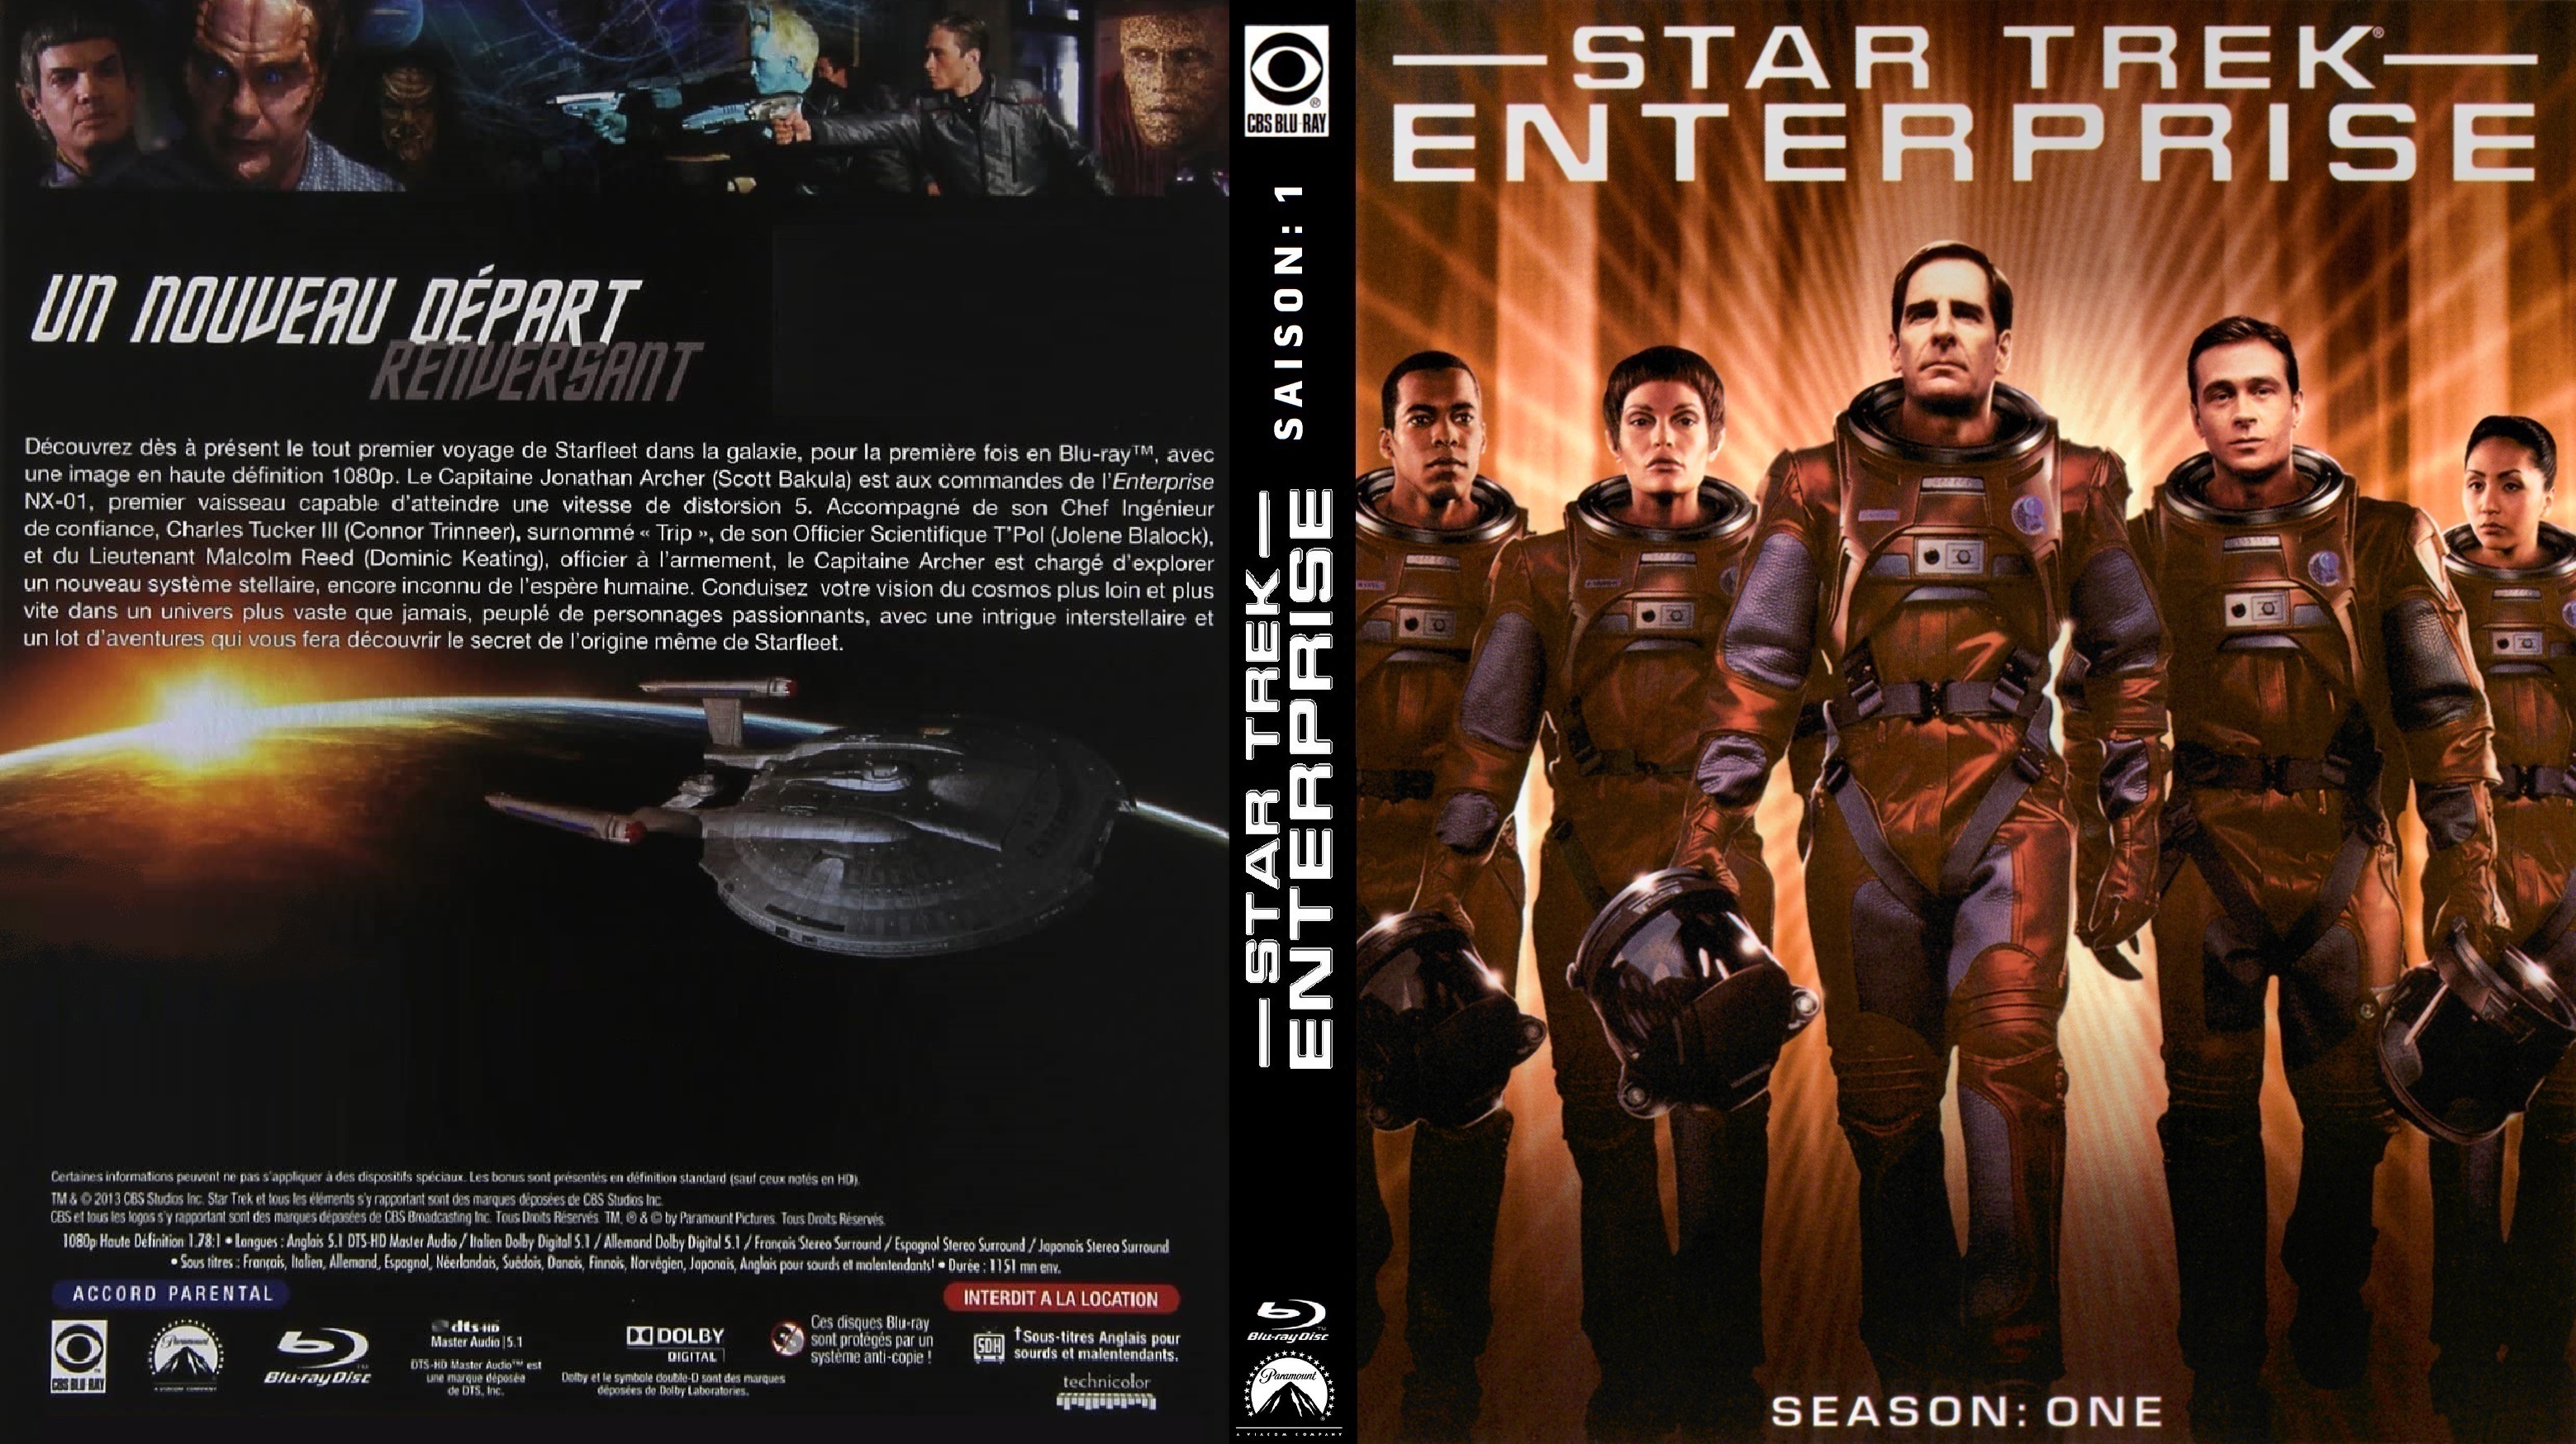 Jaquette DVD Star Trek Enterprise Saison 1 Blu-ray custom